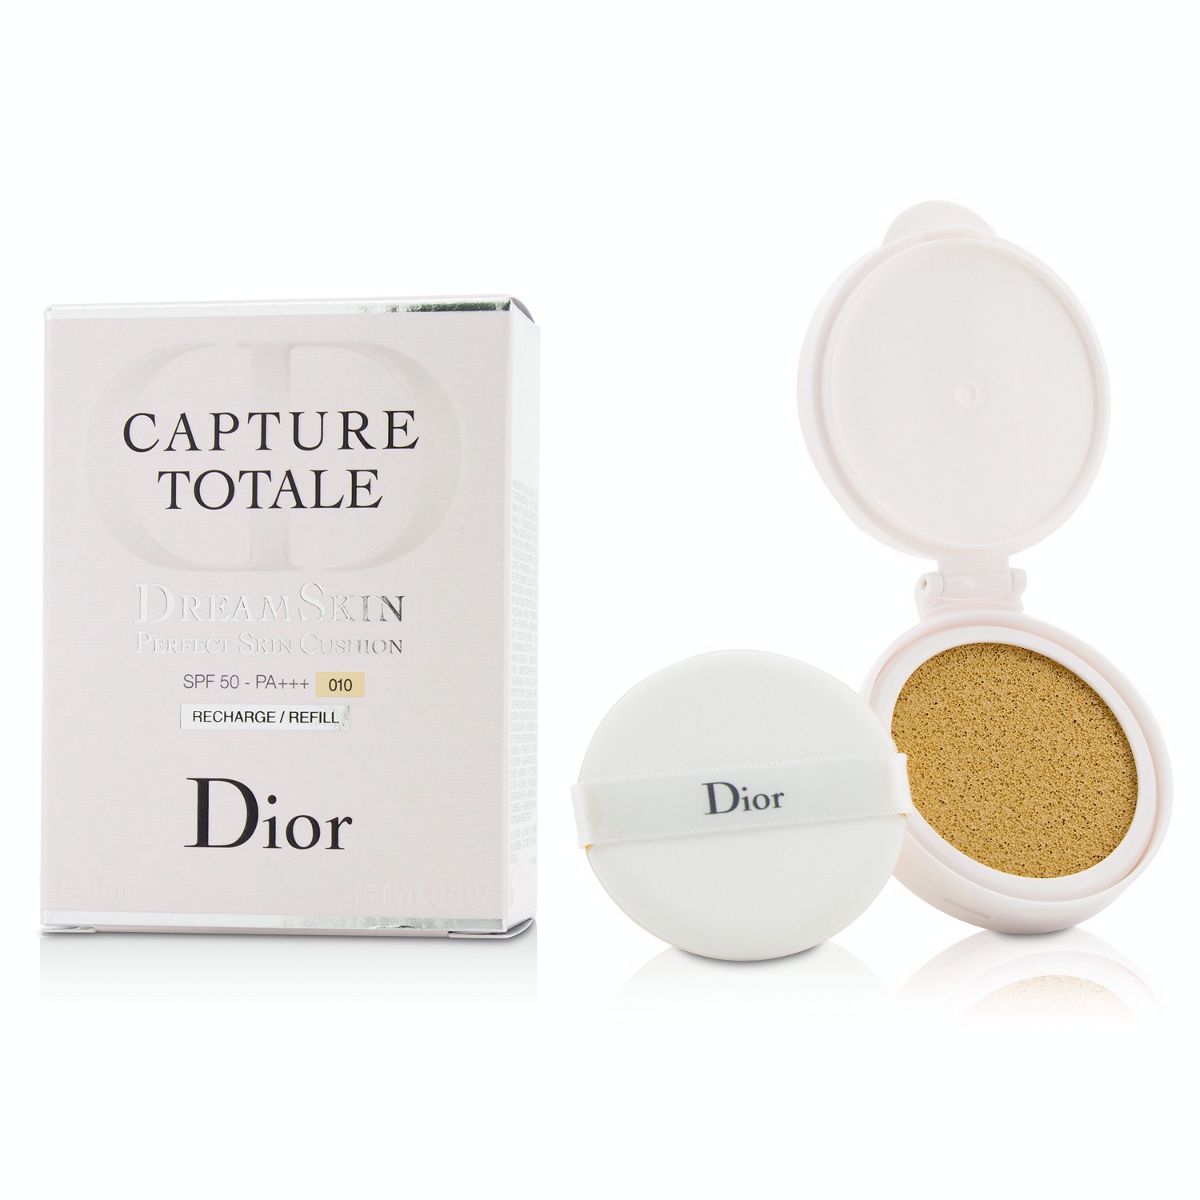 Capture Totale Dreamskin Perfect Skin Cushion SPF 50 Refill - # 010 Christian Dior Image